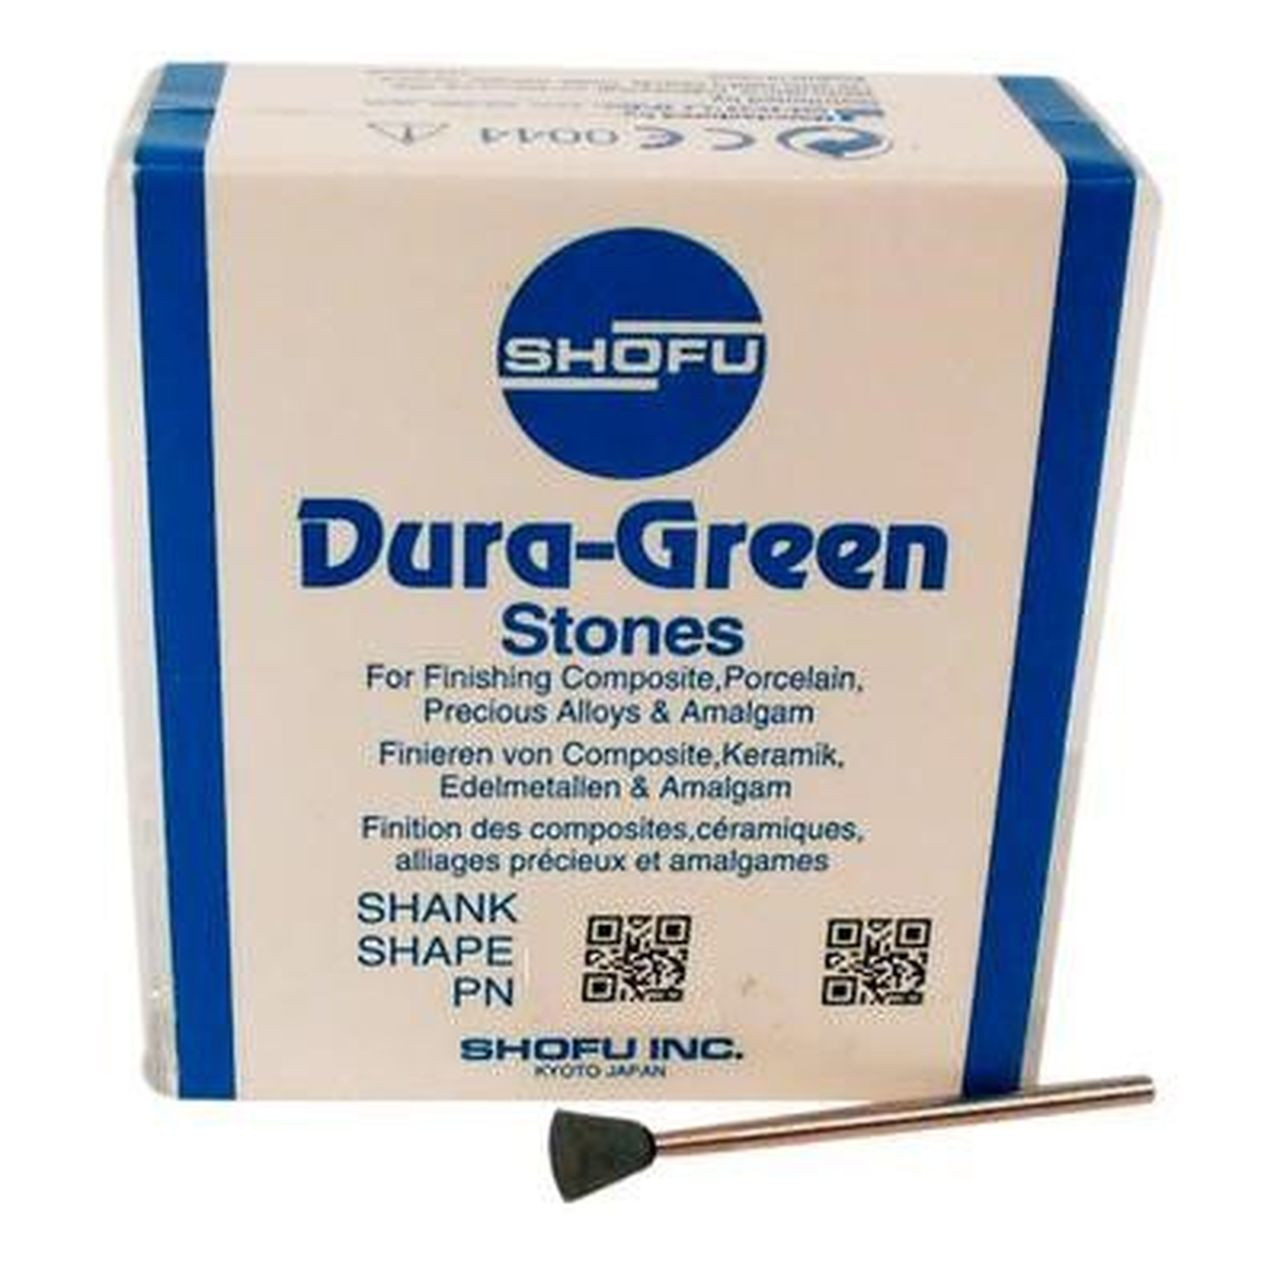 Shofu Dura-Green Stones FG, CY2, 12/pk